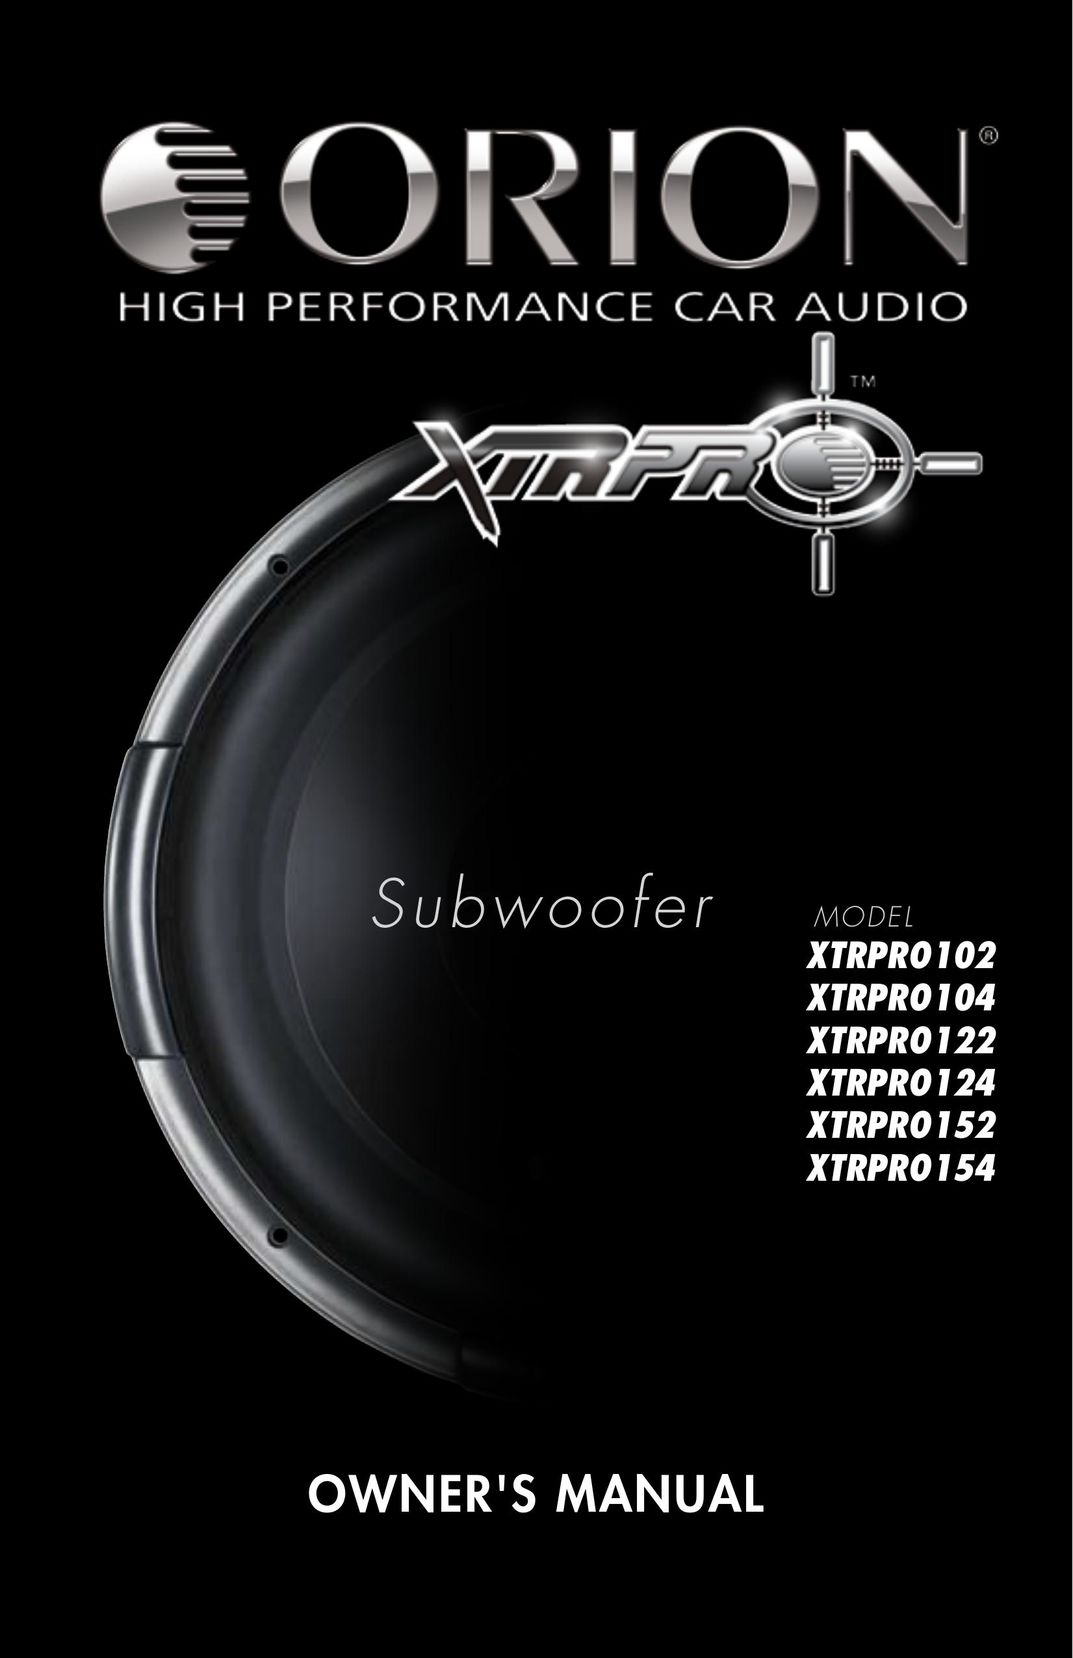 Orion Car Audio XTRPRO124 Speaker User Manual